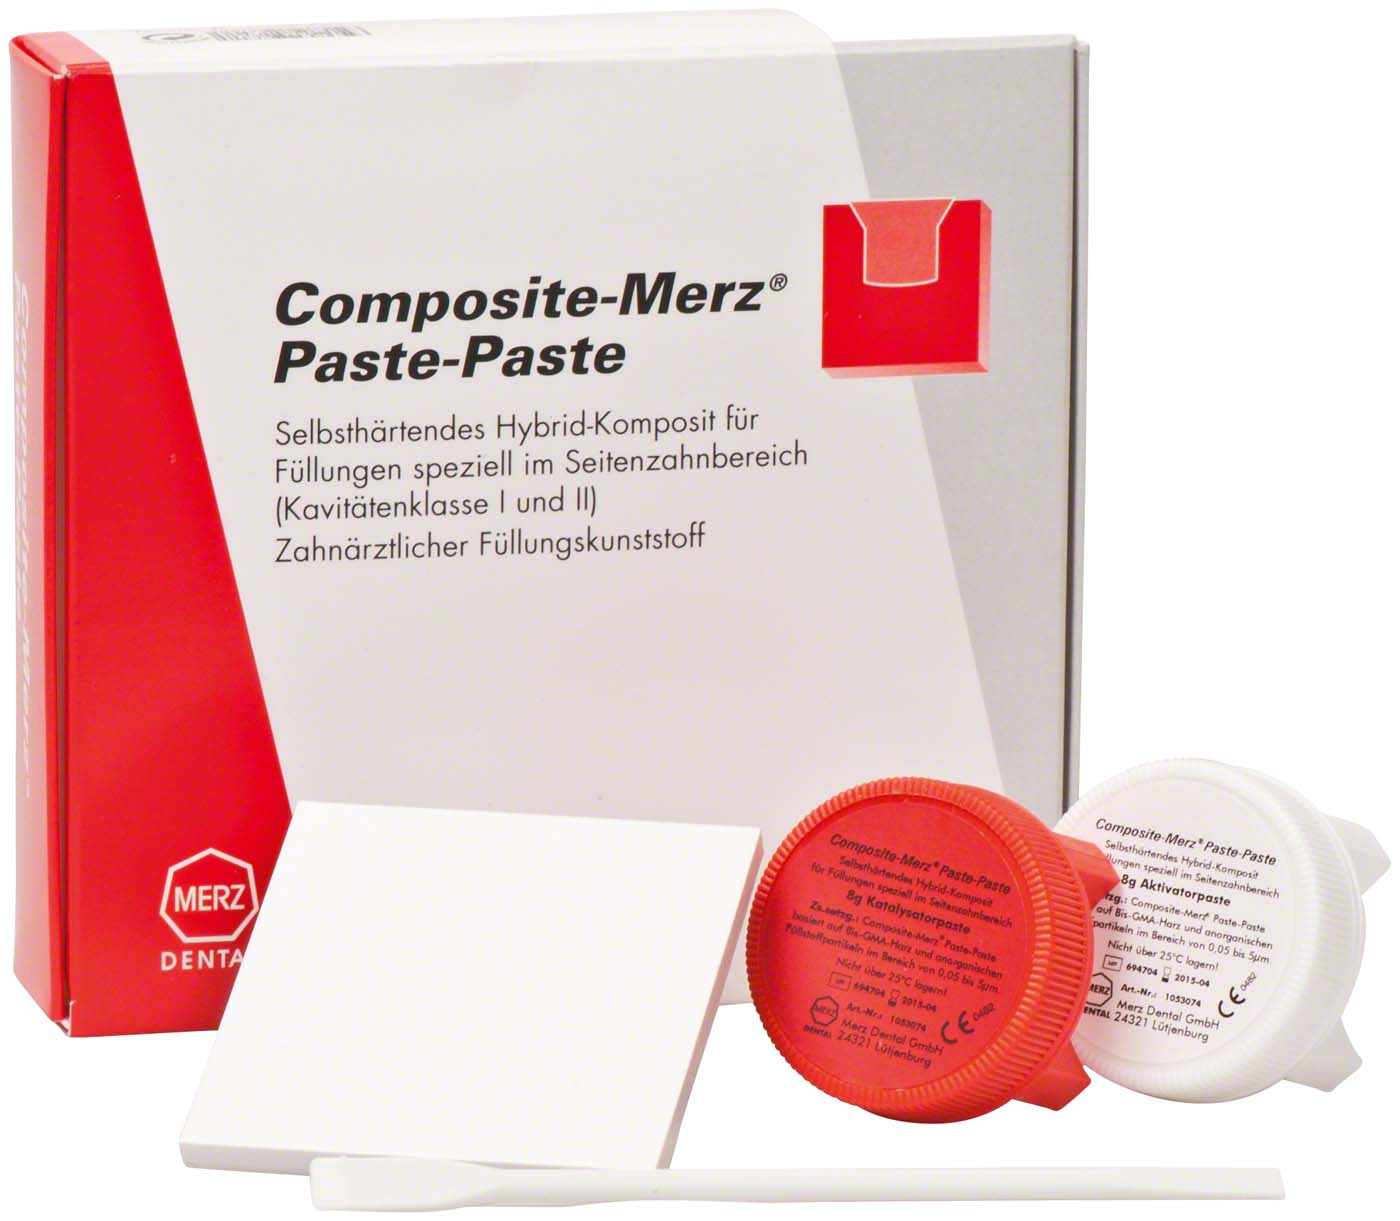 Composite-Merz® Paste-Paste Merz Dental